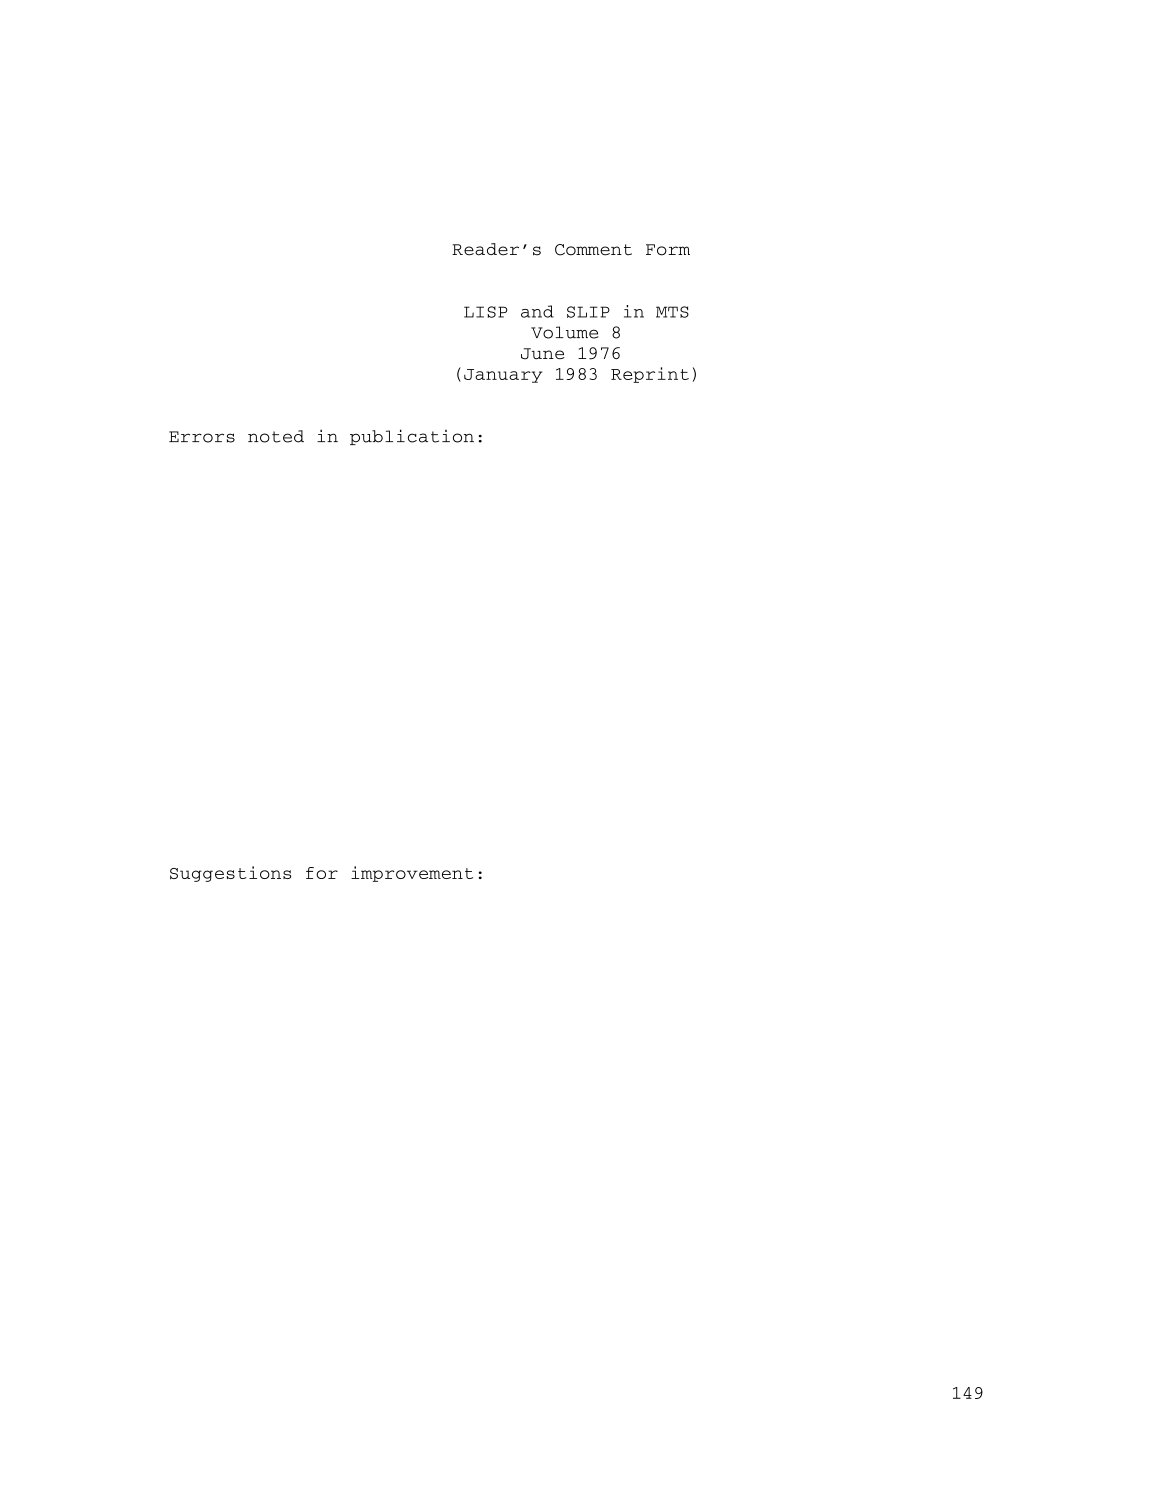 MTS Volume 8 - LISP and SLIP page 156